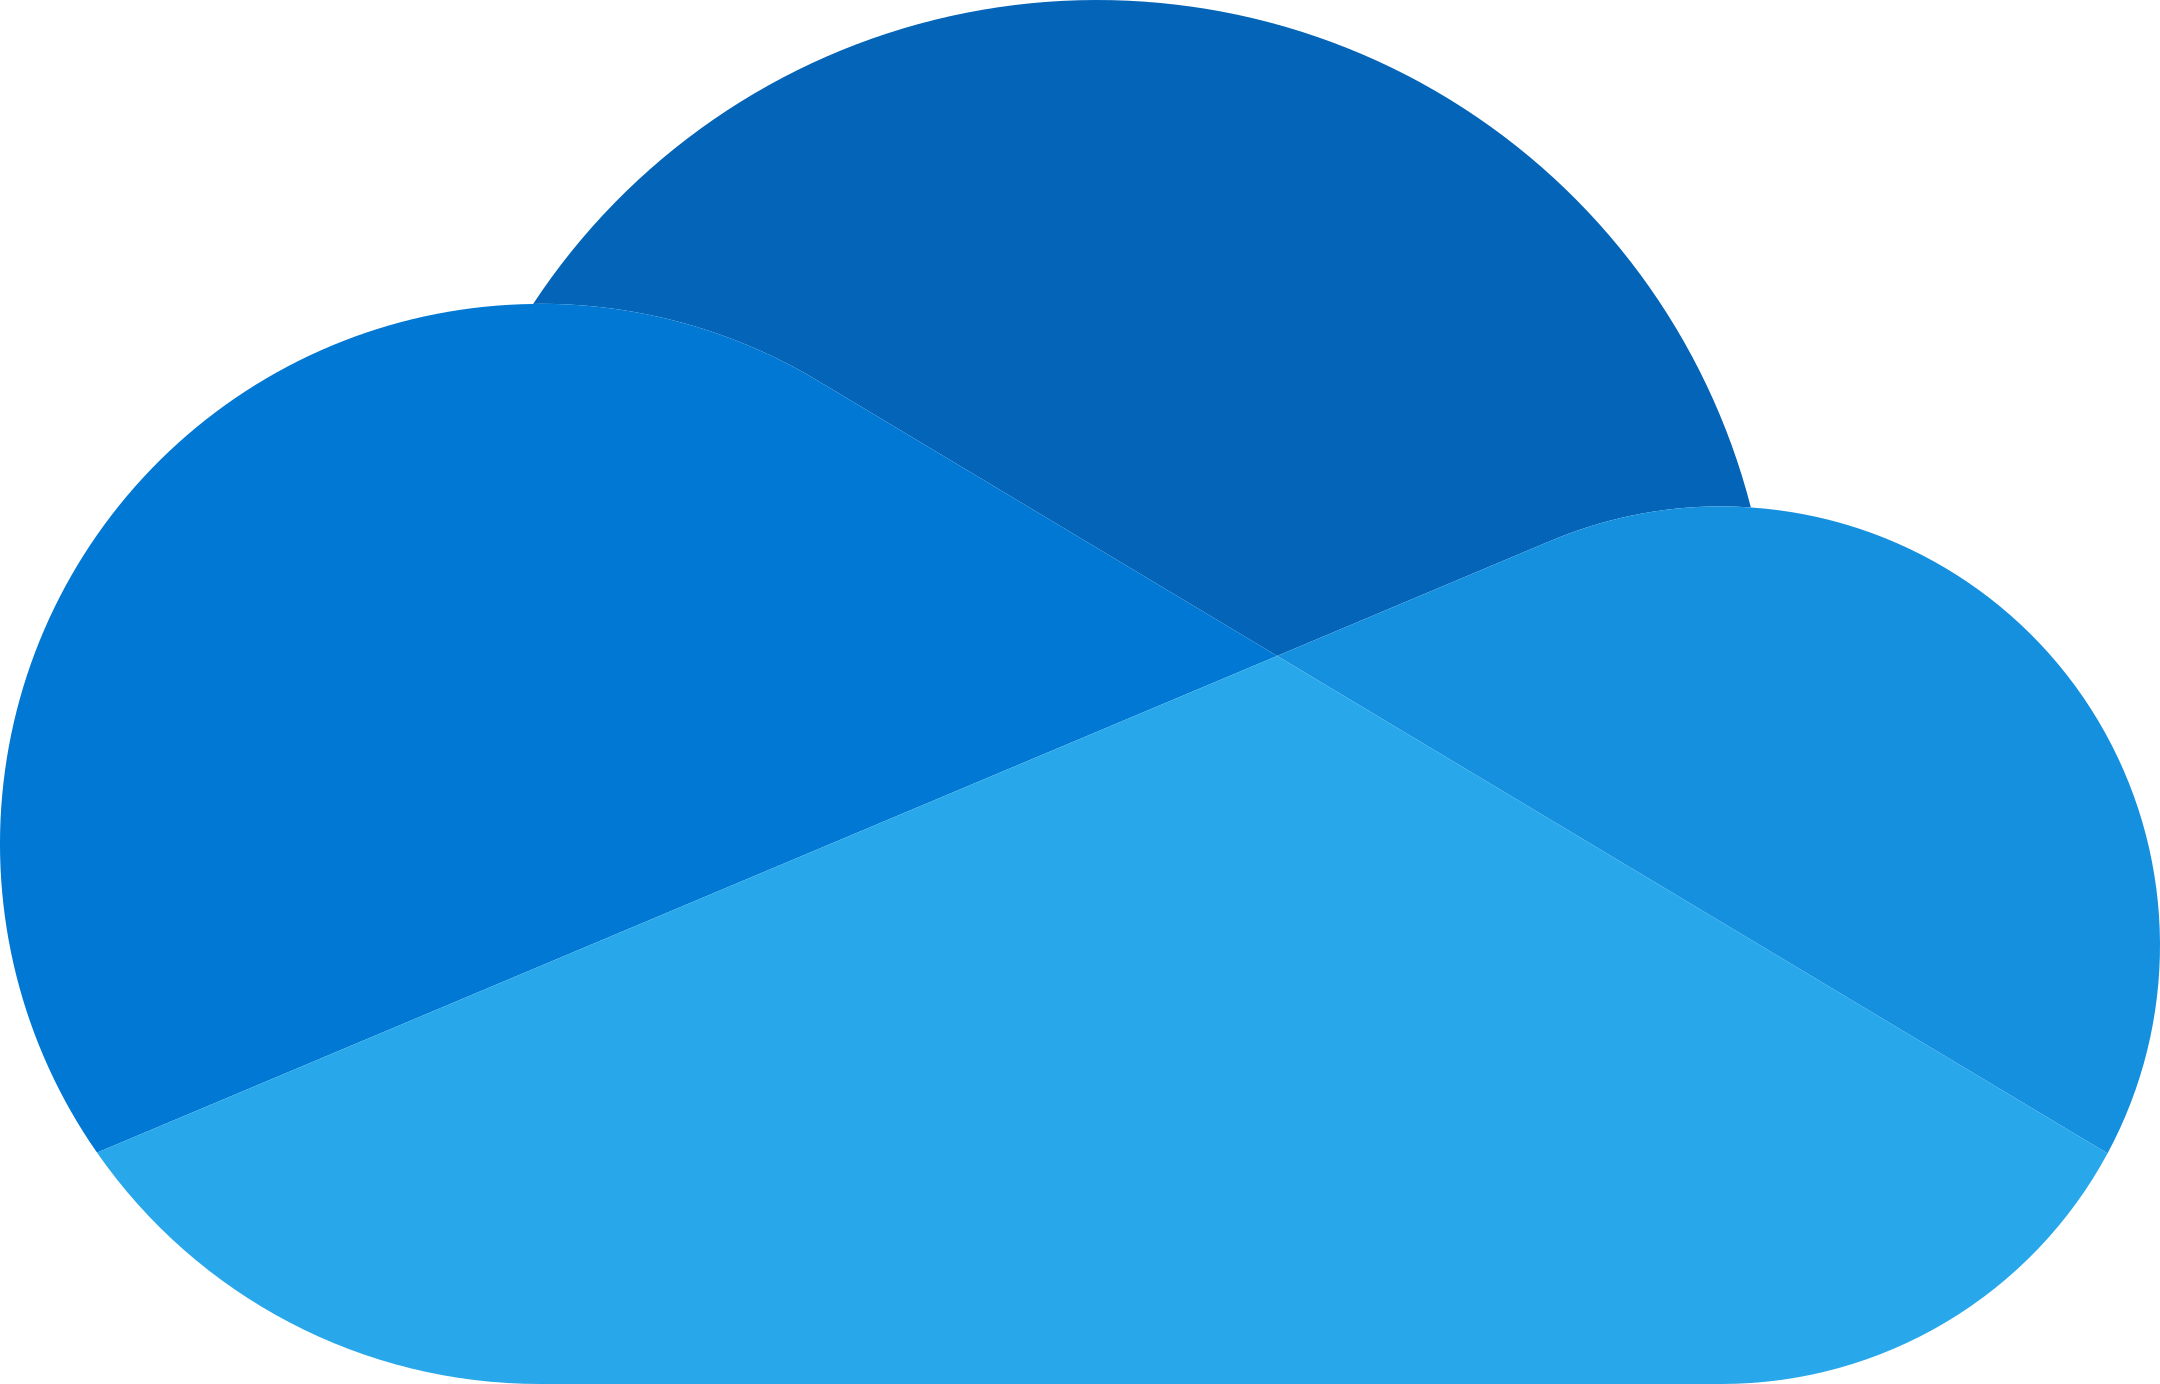 onedrive logo 1 - OneDrive Logo